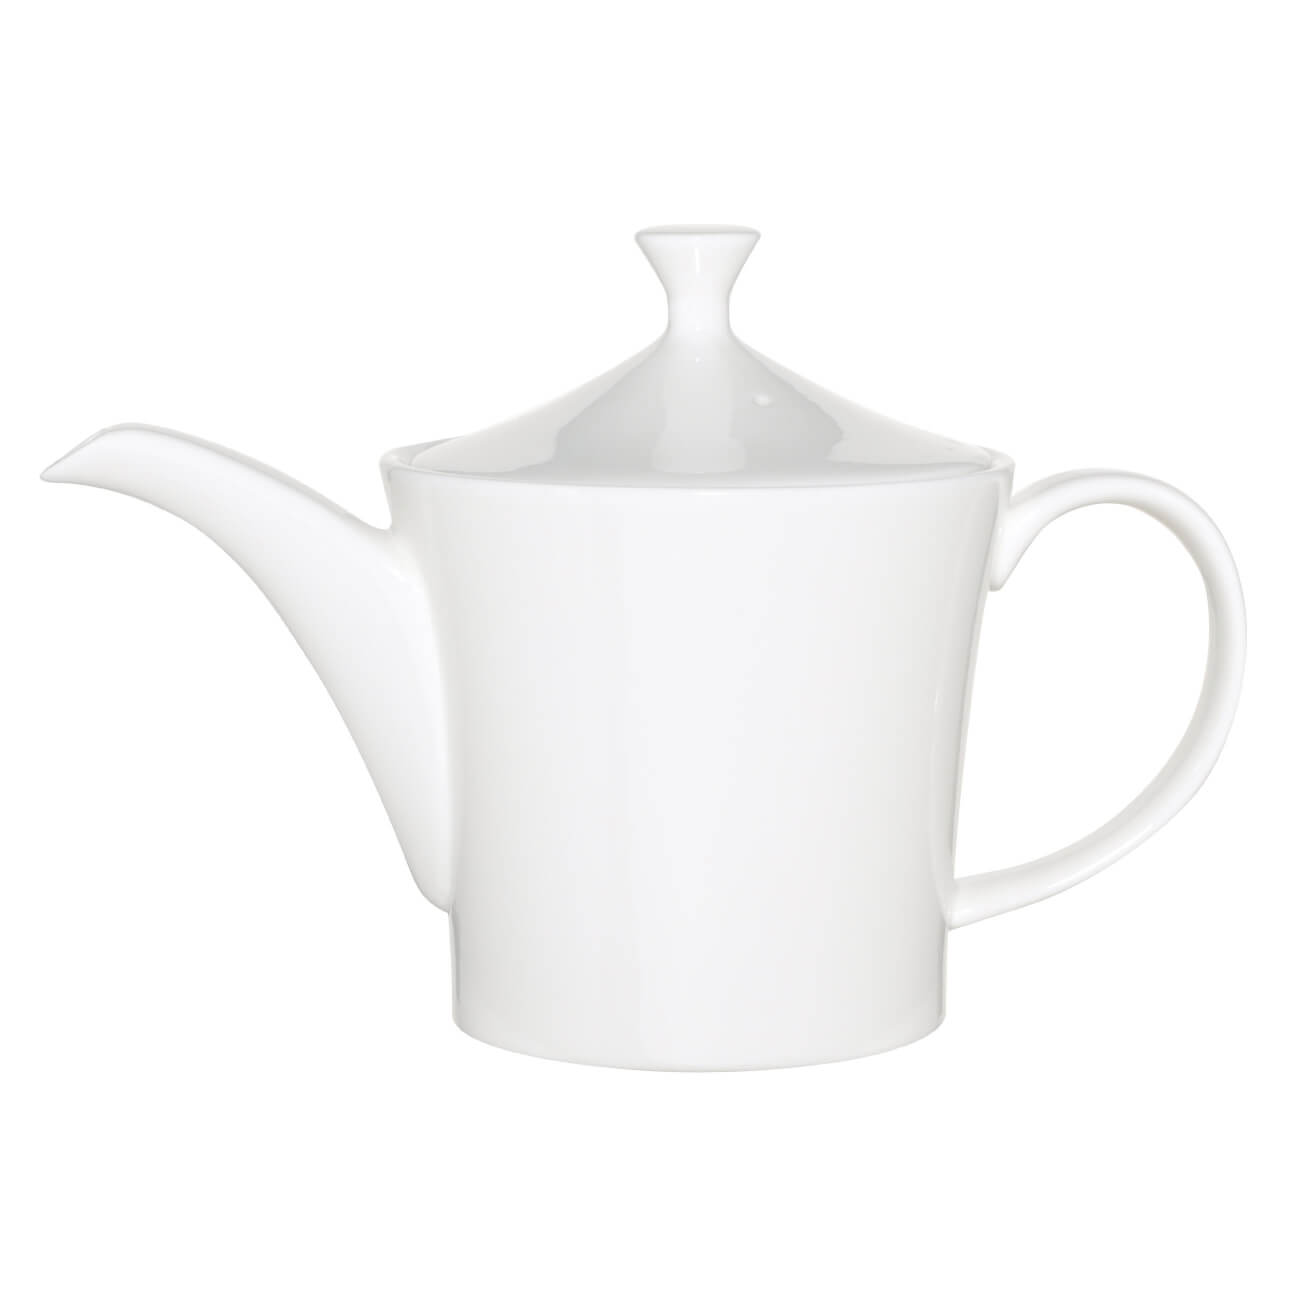 Чайник заварочный, 800 мл, фарфор F, белый, Ideal white чайник заварочный walmer kronos 660 мл